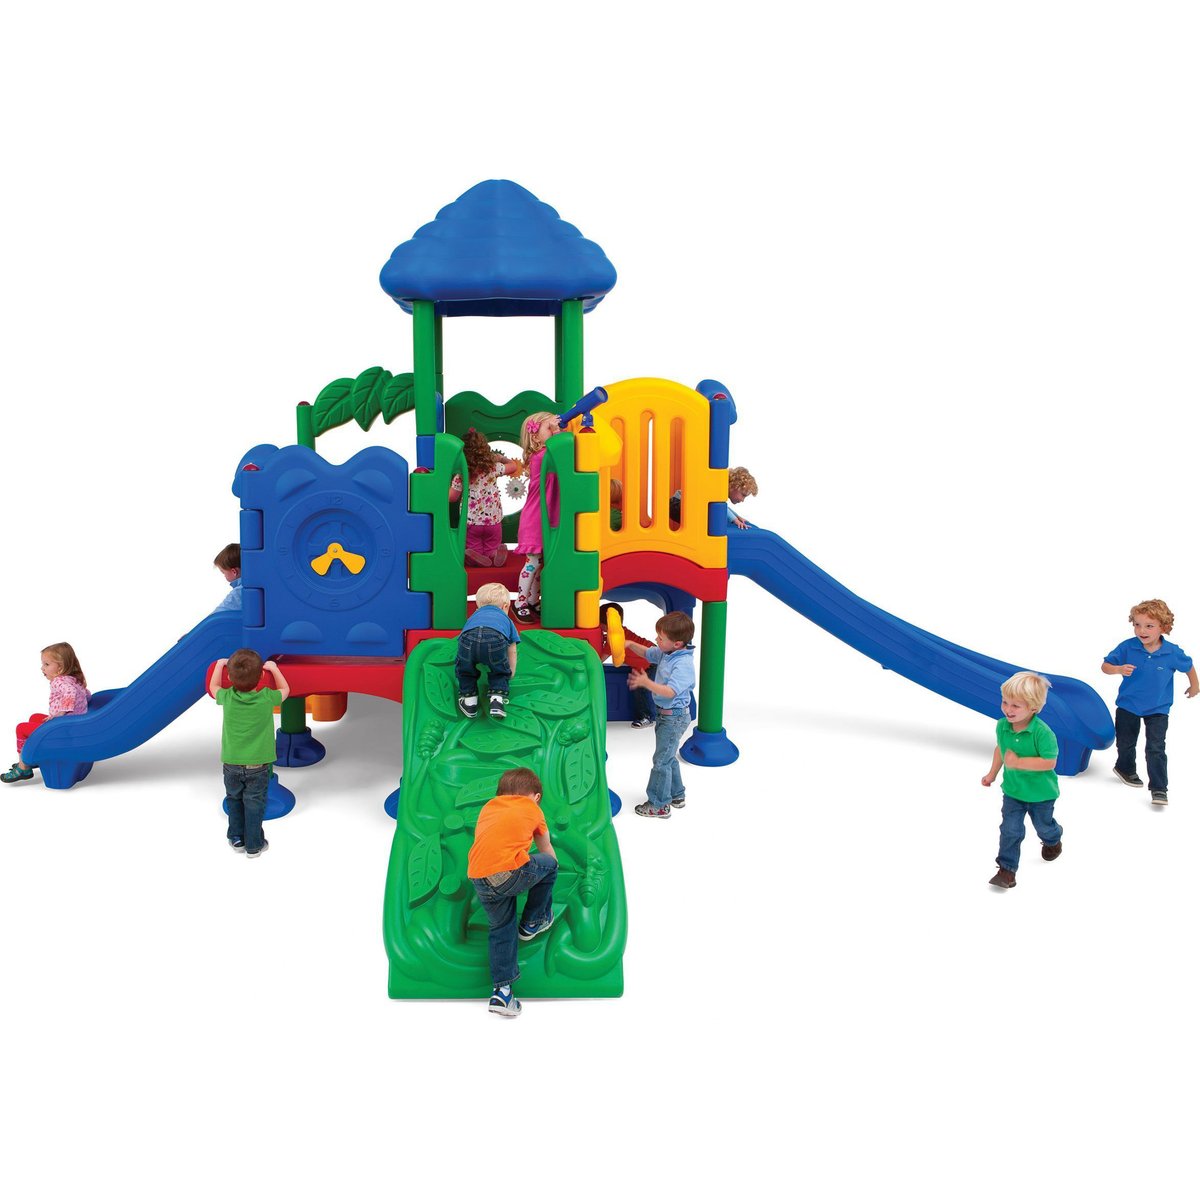 Playground Equipment for Children 2 to 5